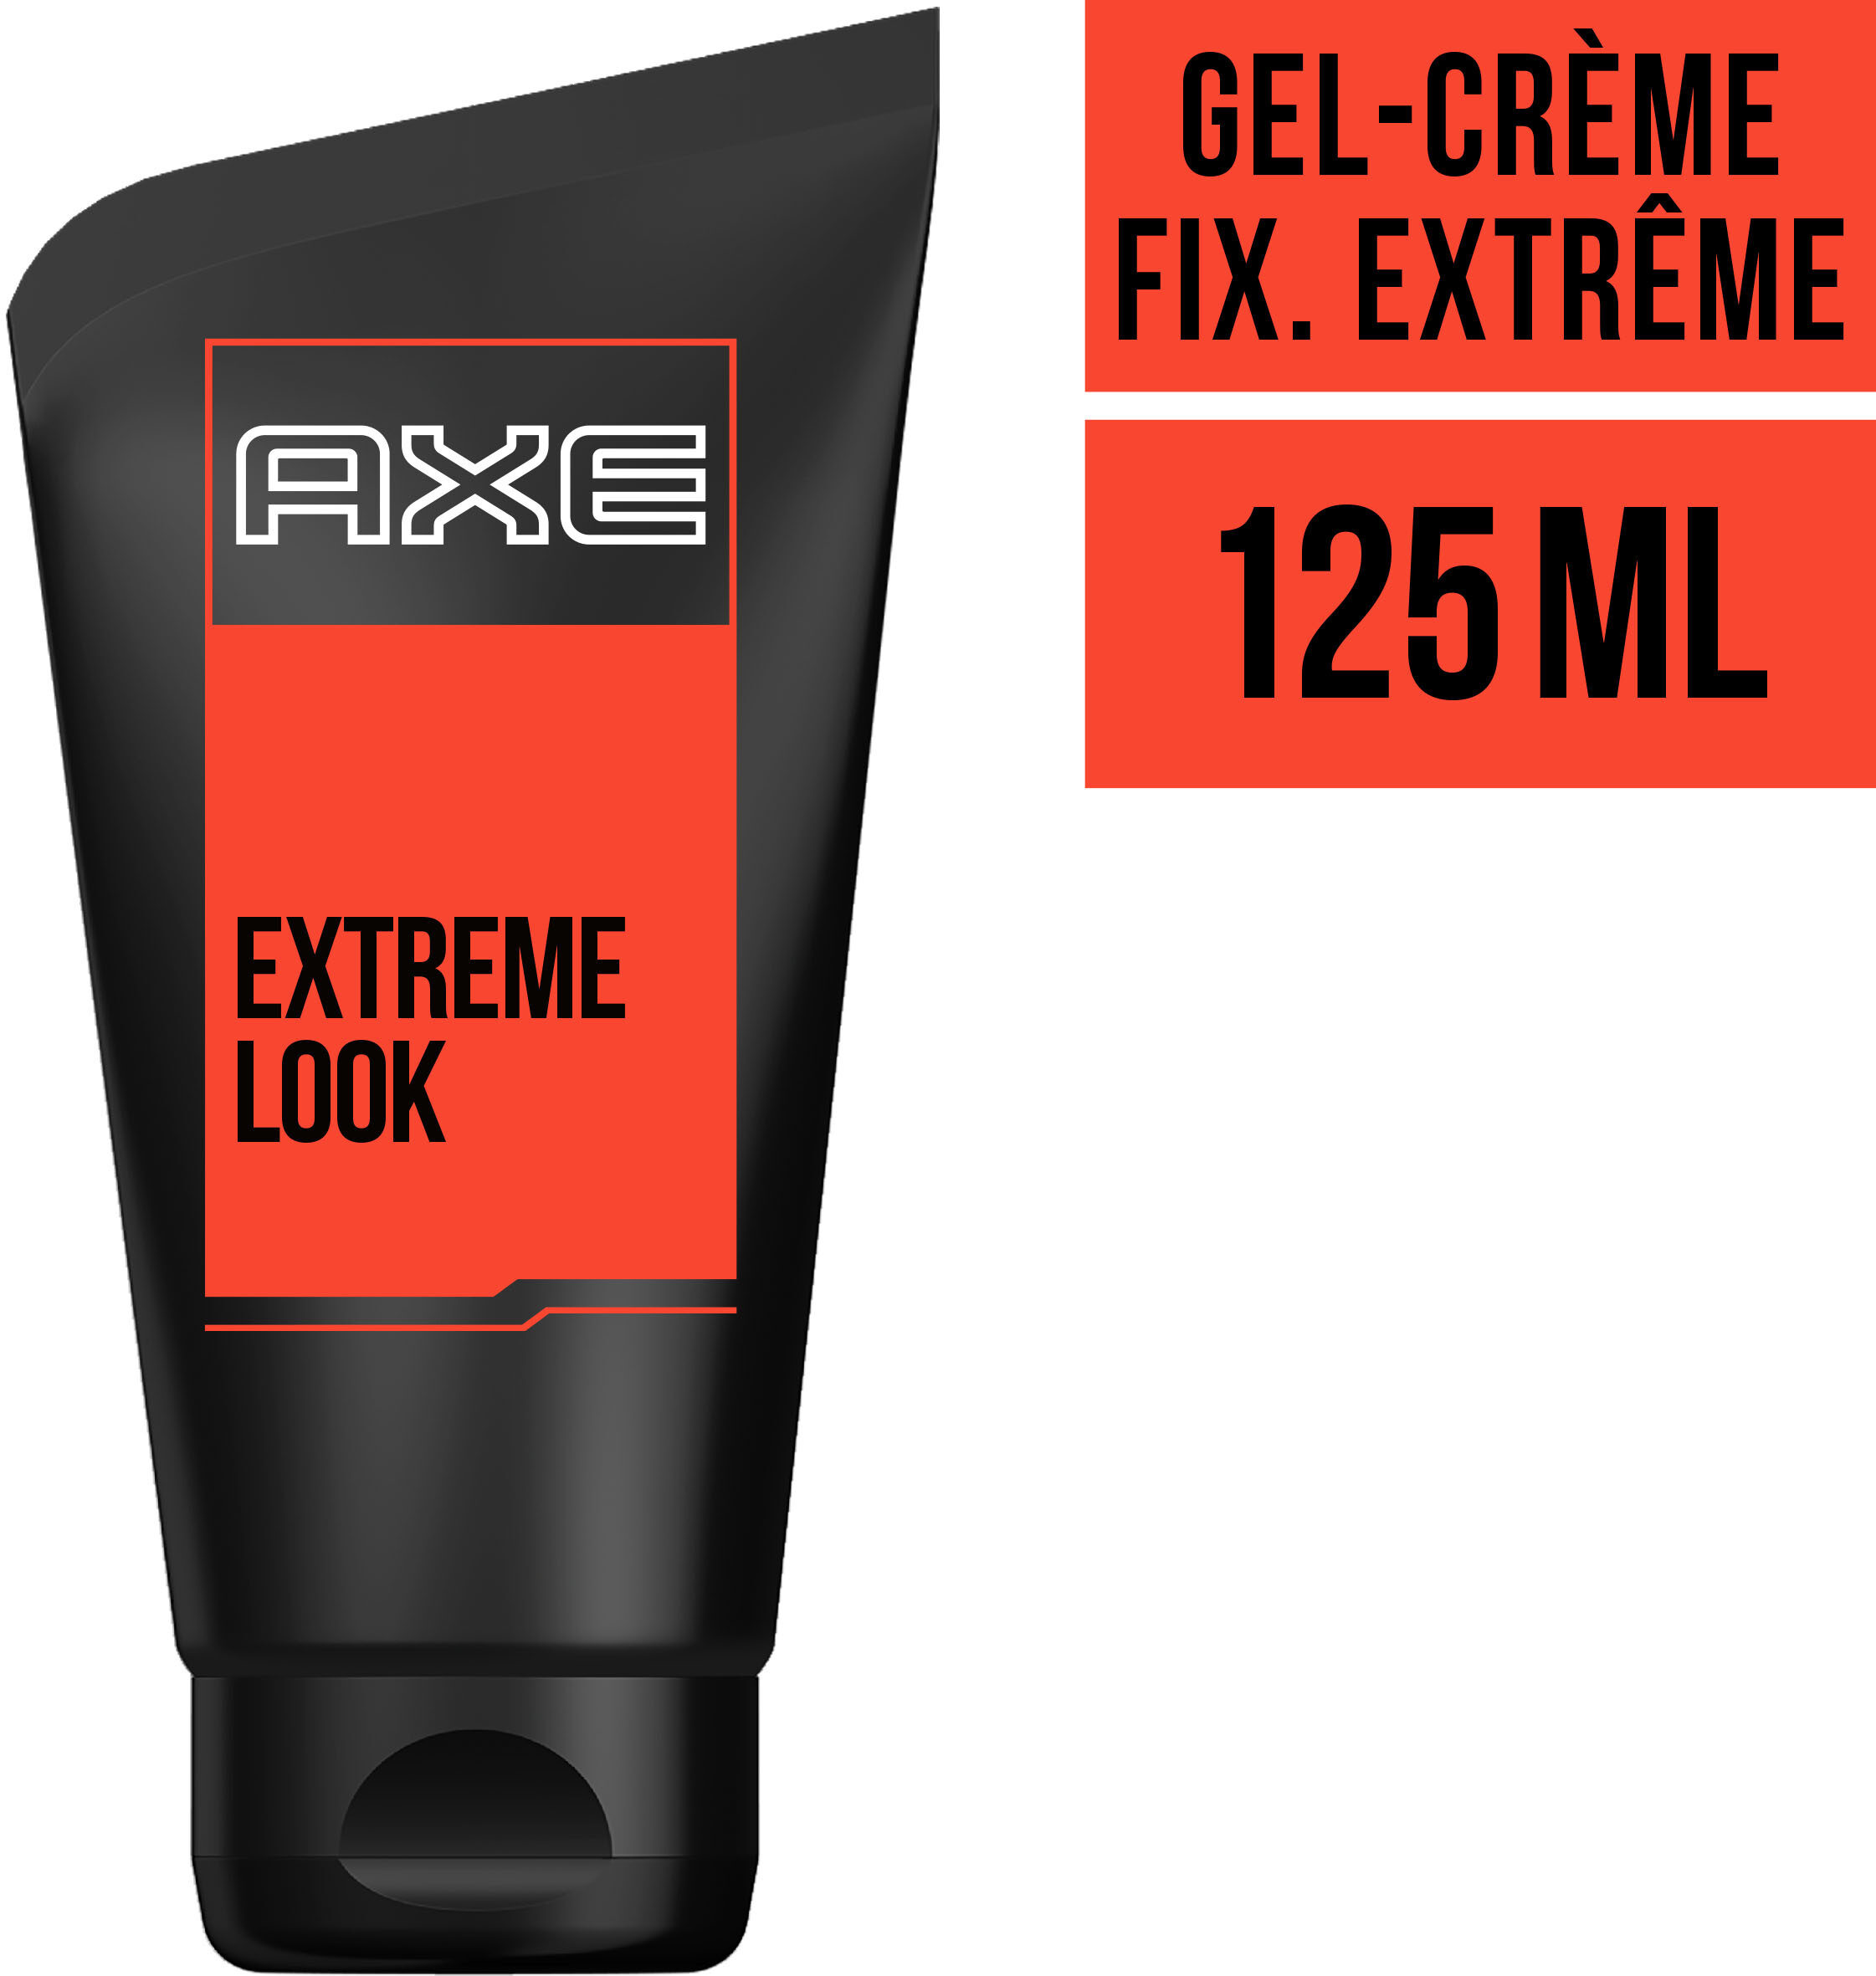 Axe Gel Cheveux Adrénaline Fixation Extrême 125ml - Tuote - fr